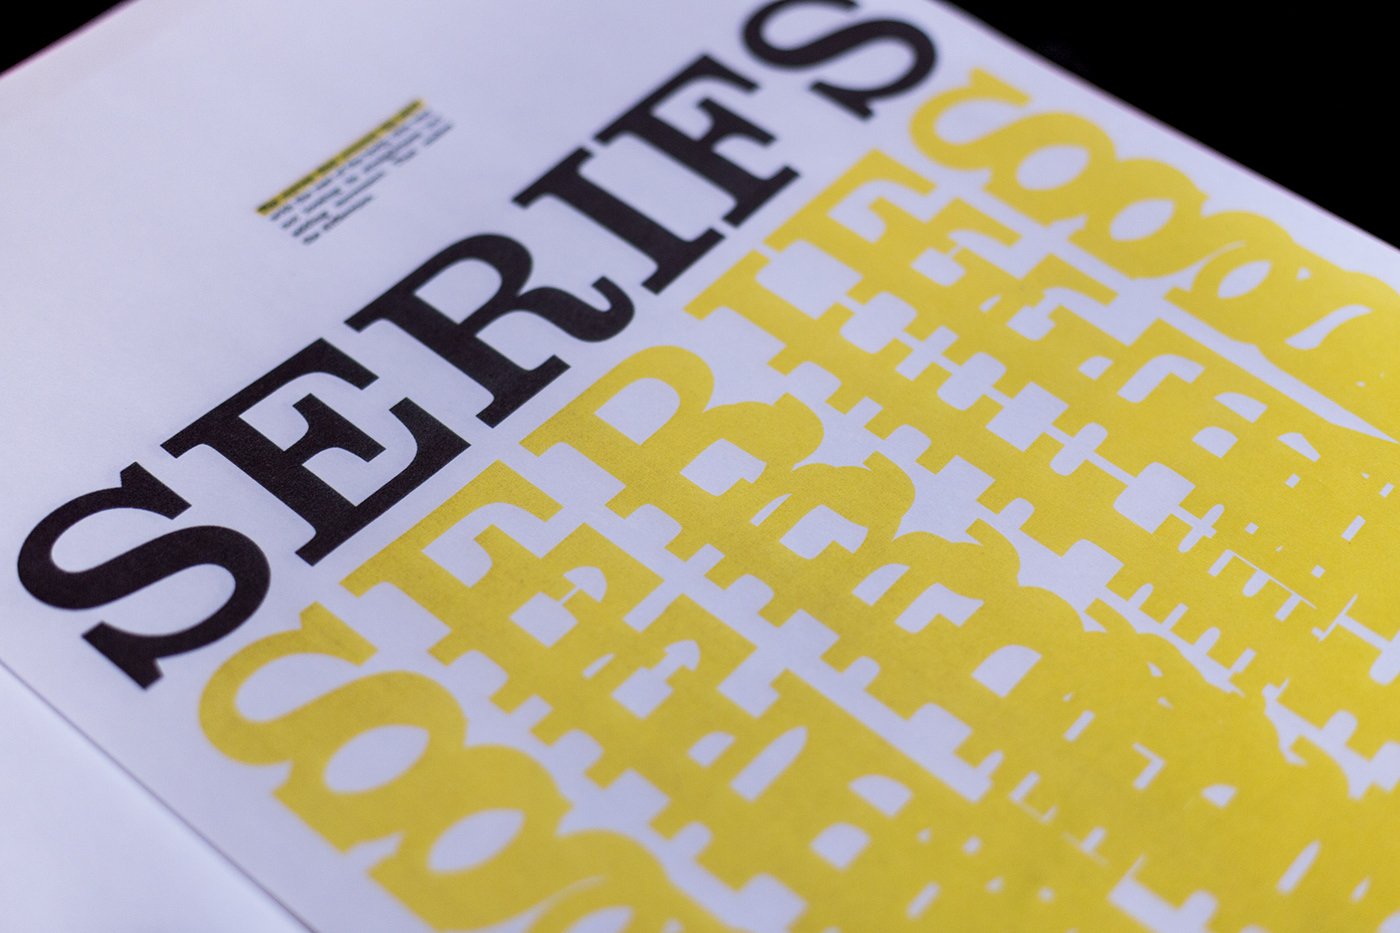 fonts newspaper periodico Diseño editorial editorial design  desing graphic grafico yellow amarillo